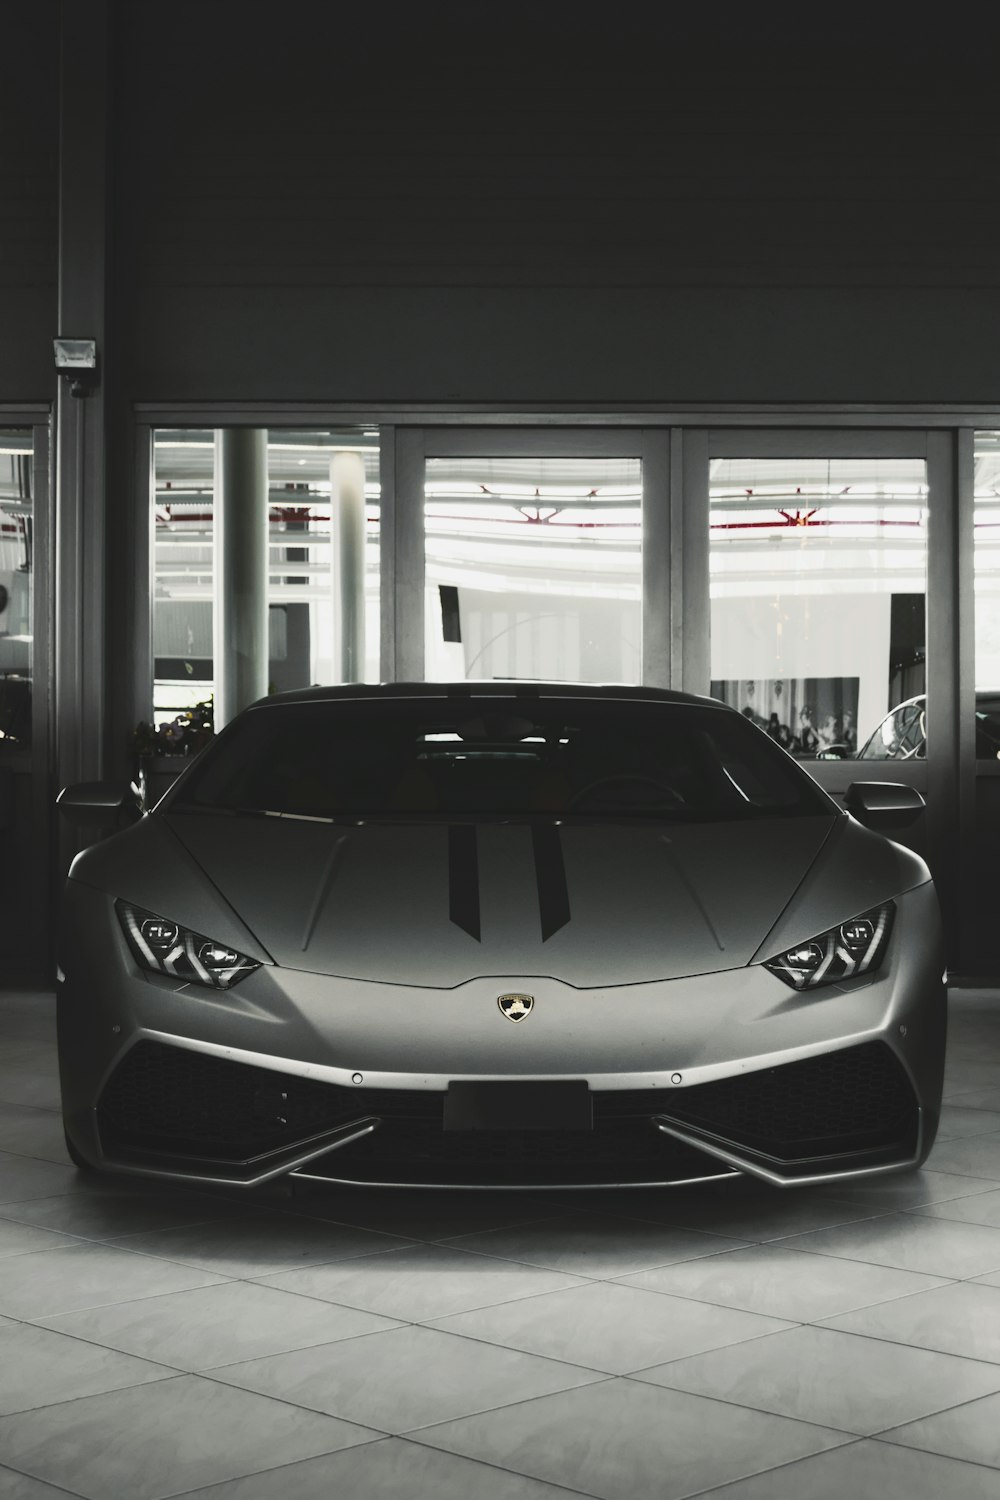 Lamborghini Wallpapers: Free HD